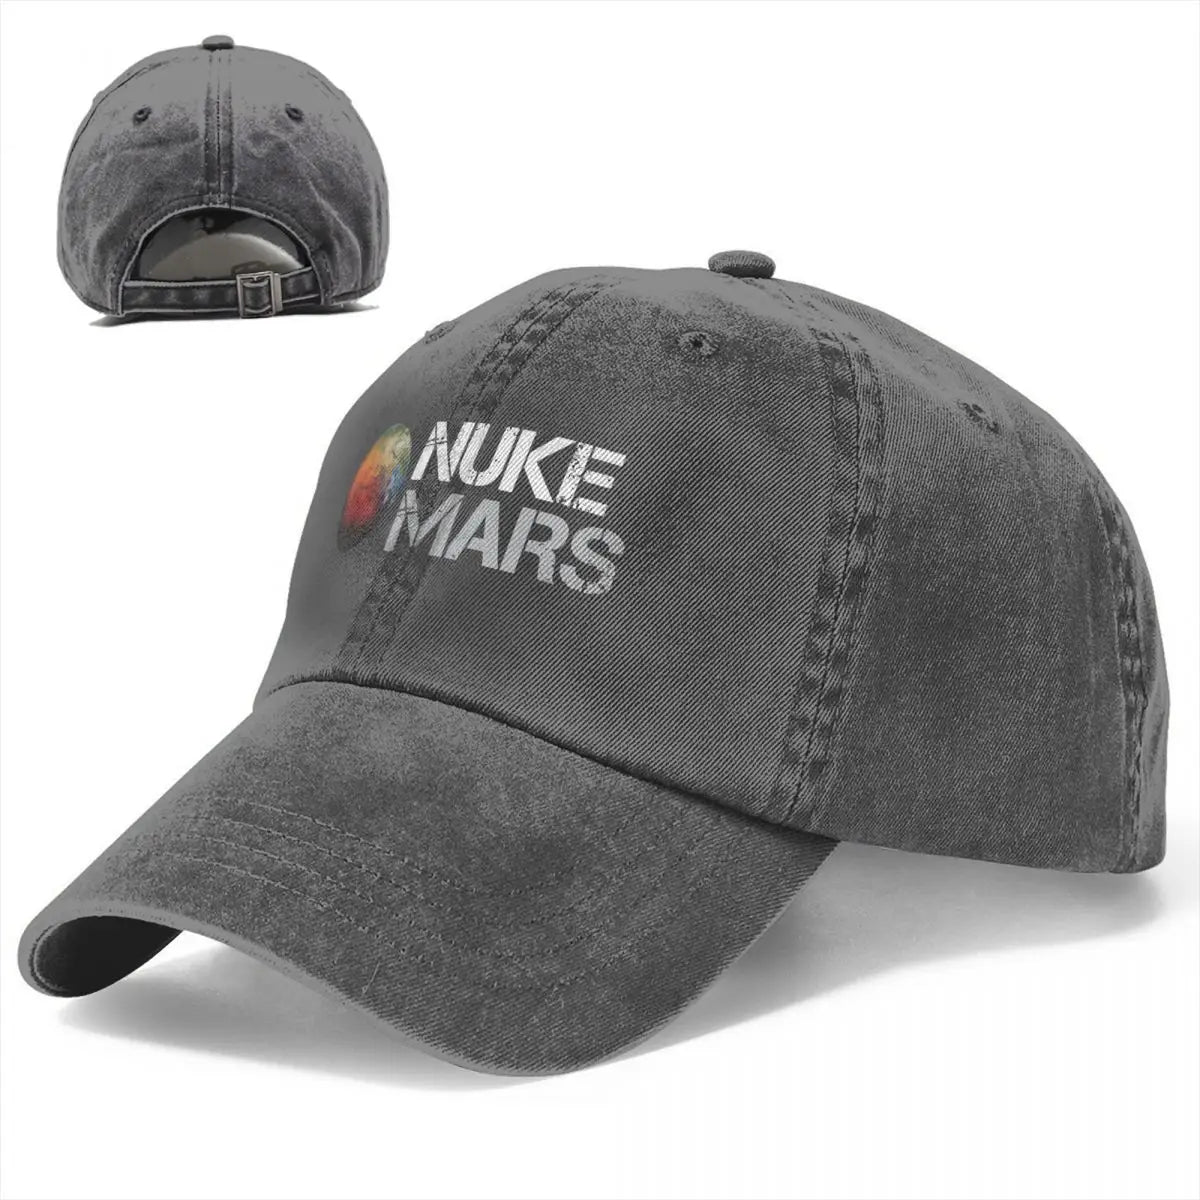 2022 New Hip Hop Washed Nuke Mars Space Mars Moon Ponytail Baseball Cap Men Women Summer Autumn Adjustable Hat Cap Hats